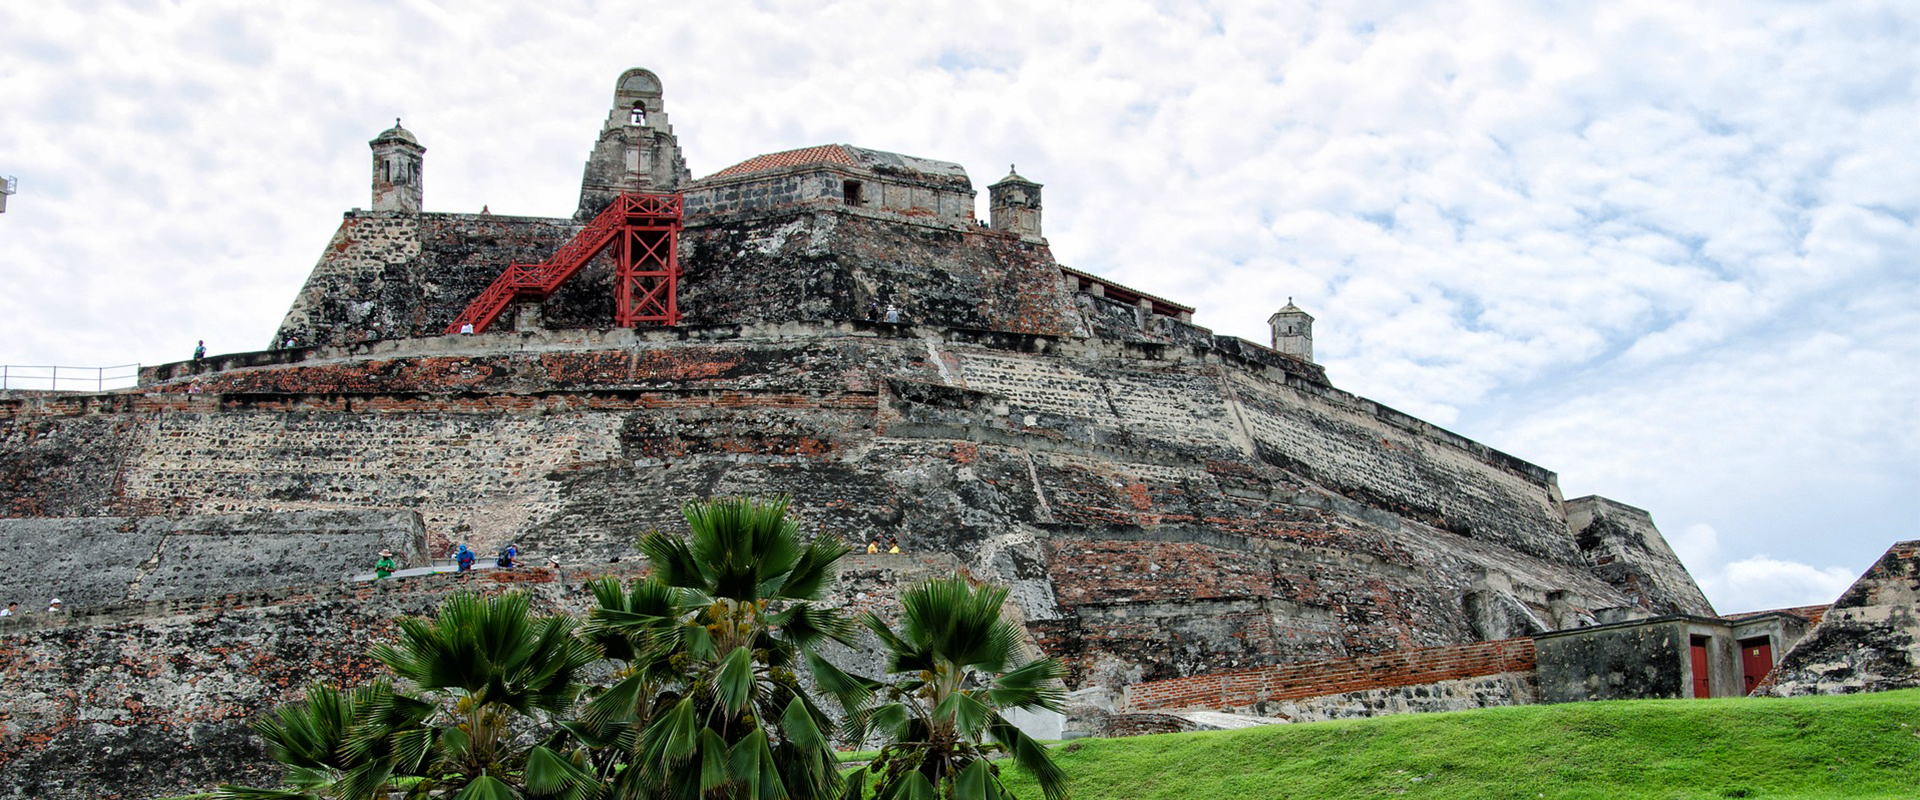 Castillo de San felipe